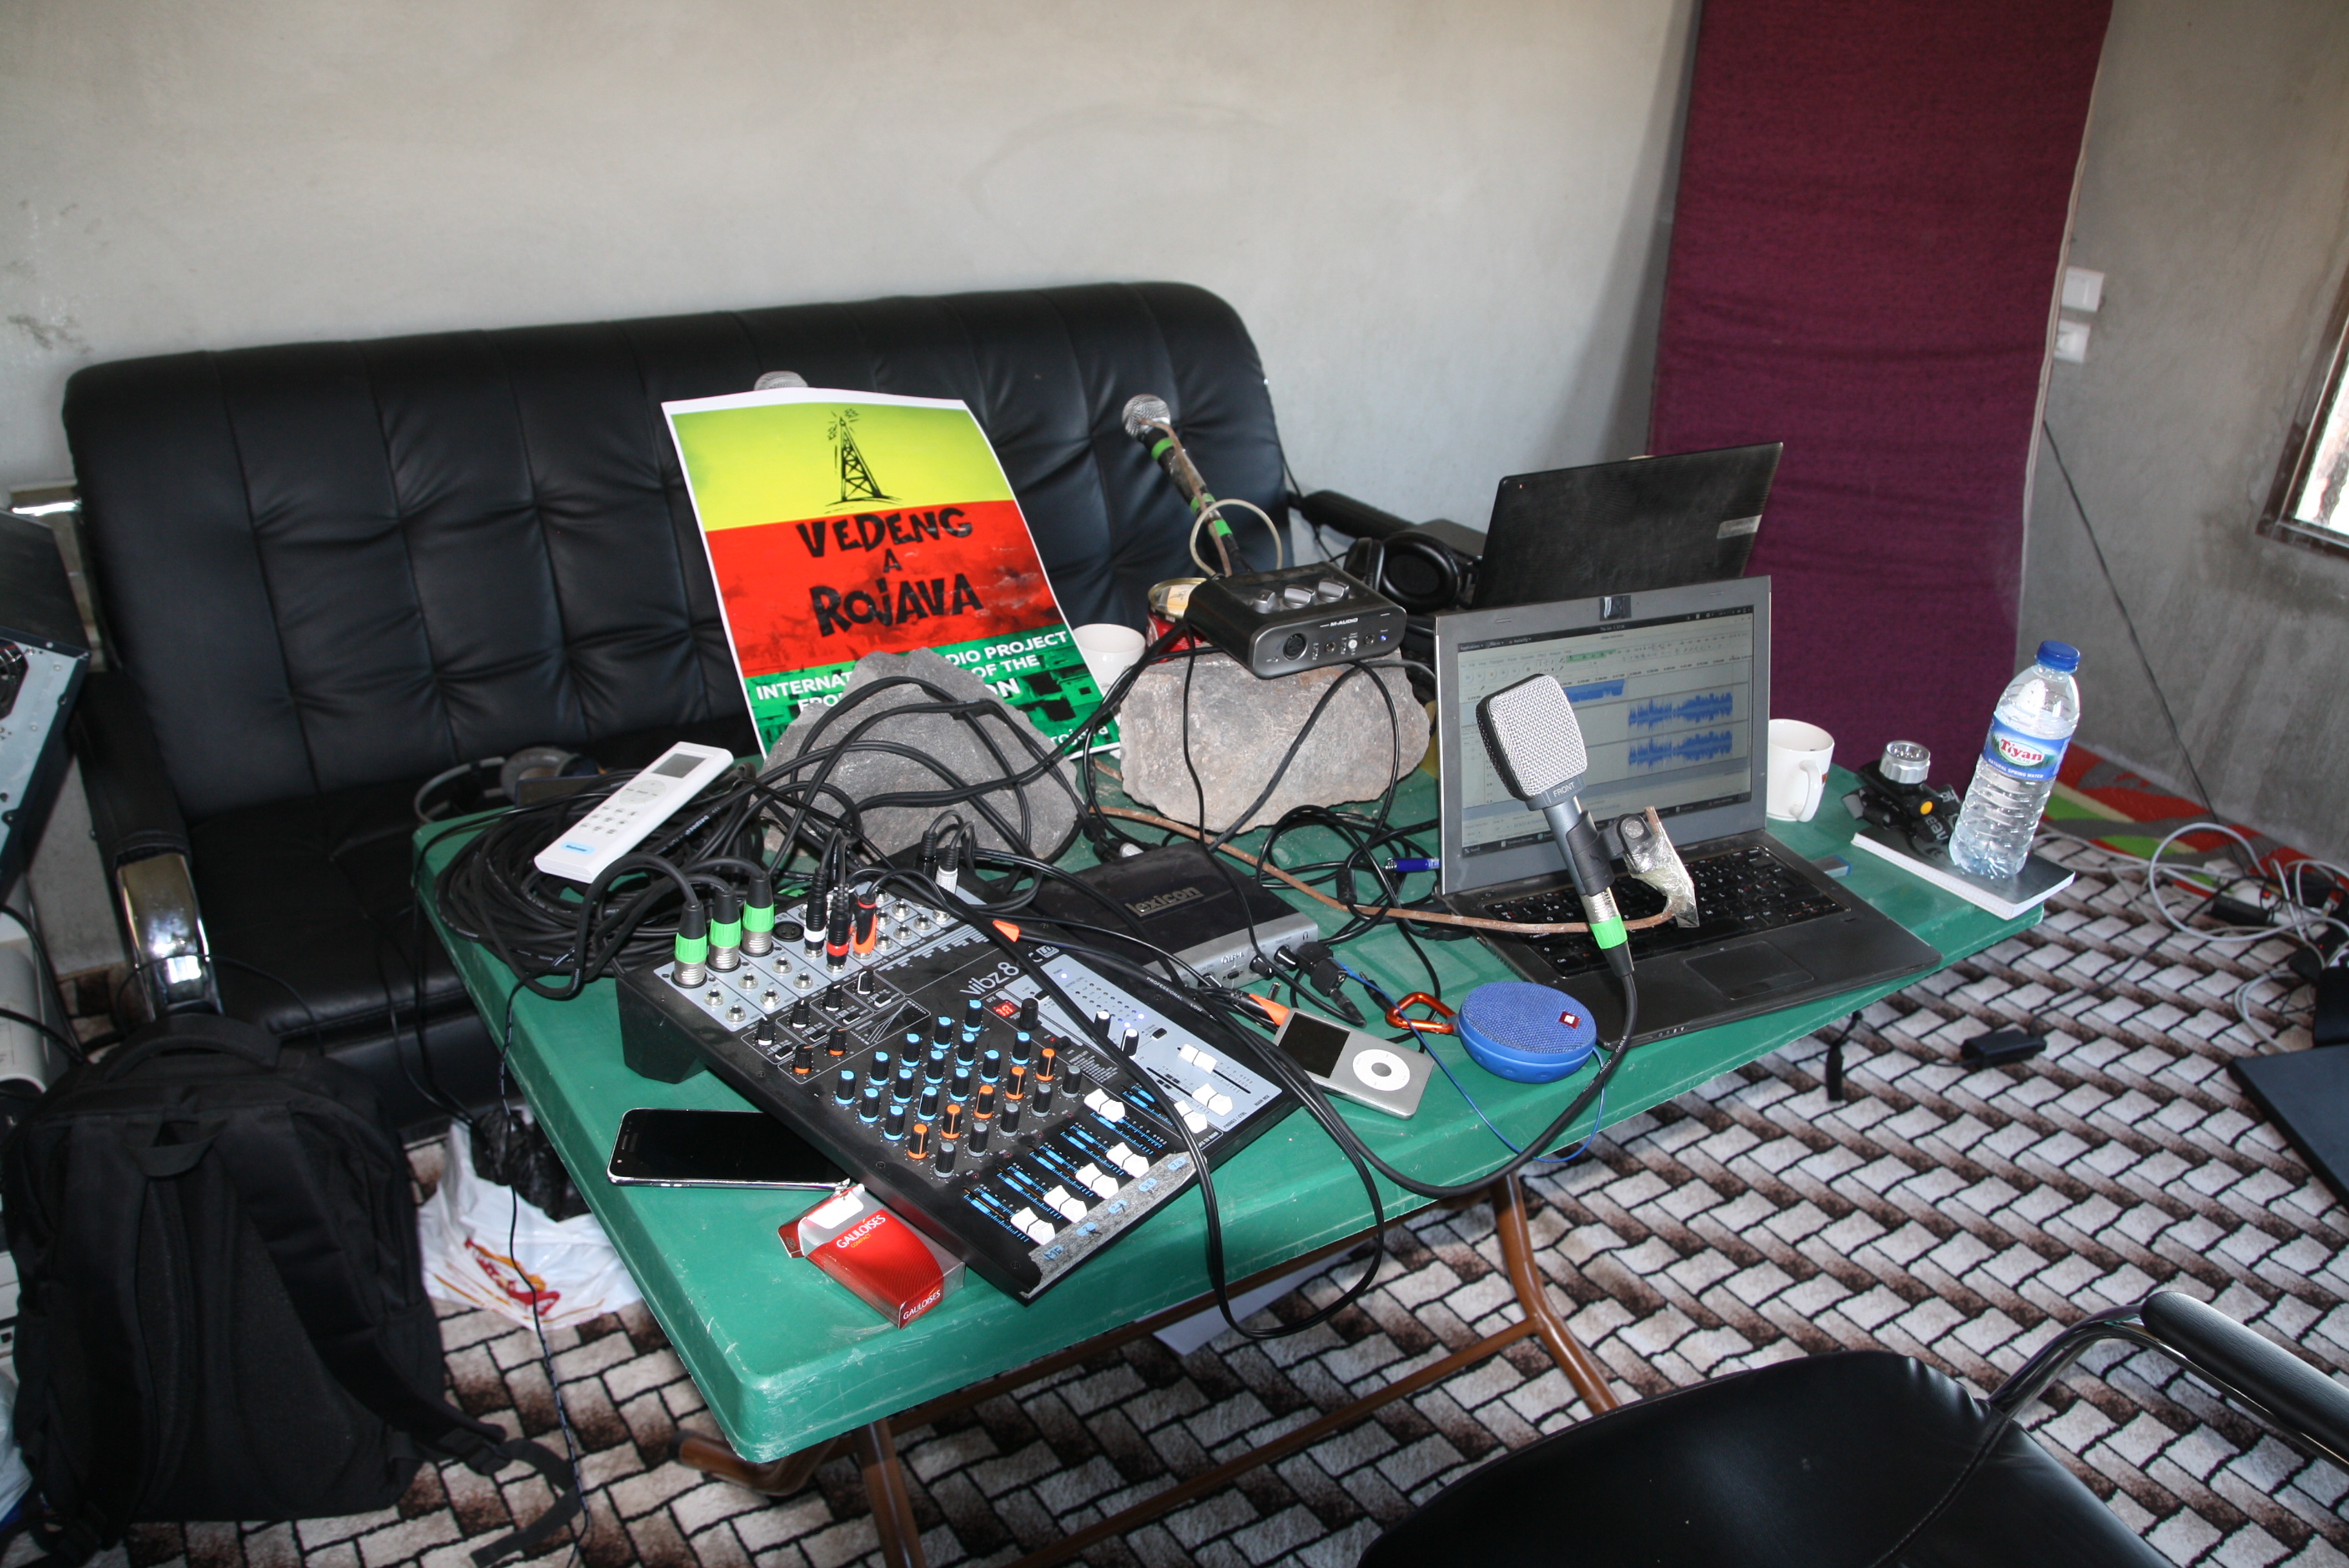 Vedenga Rojava, 3rd program of the internationalist radio project